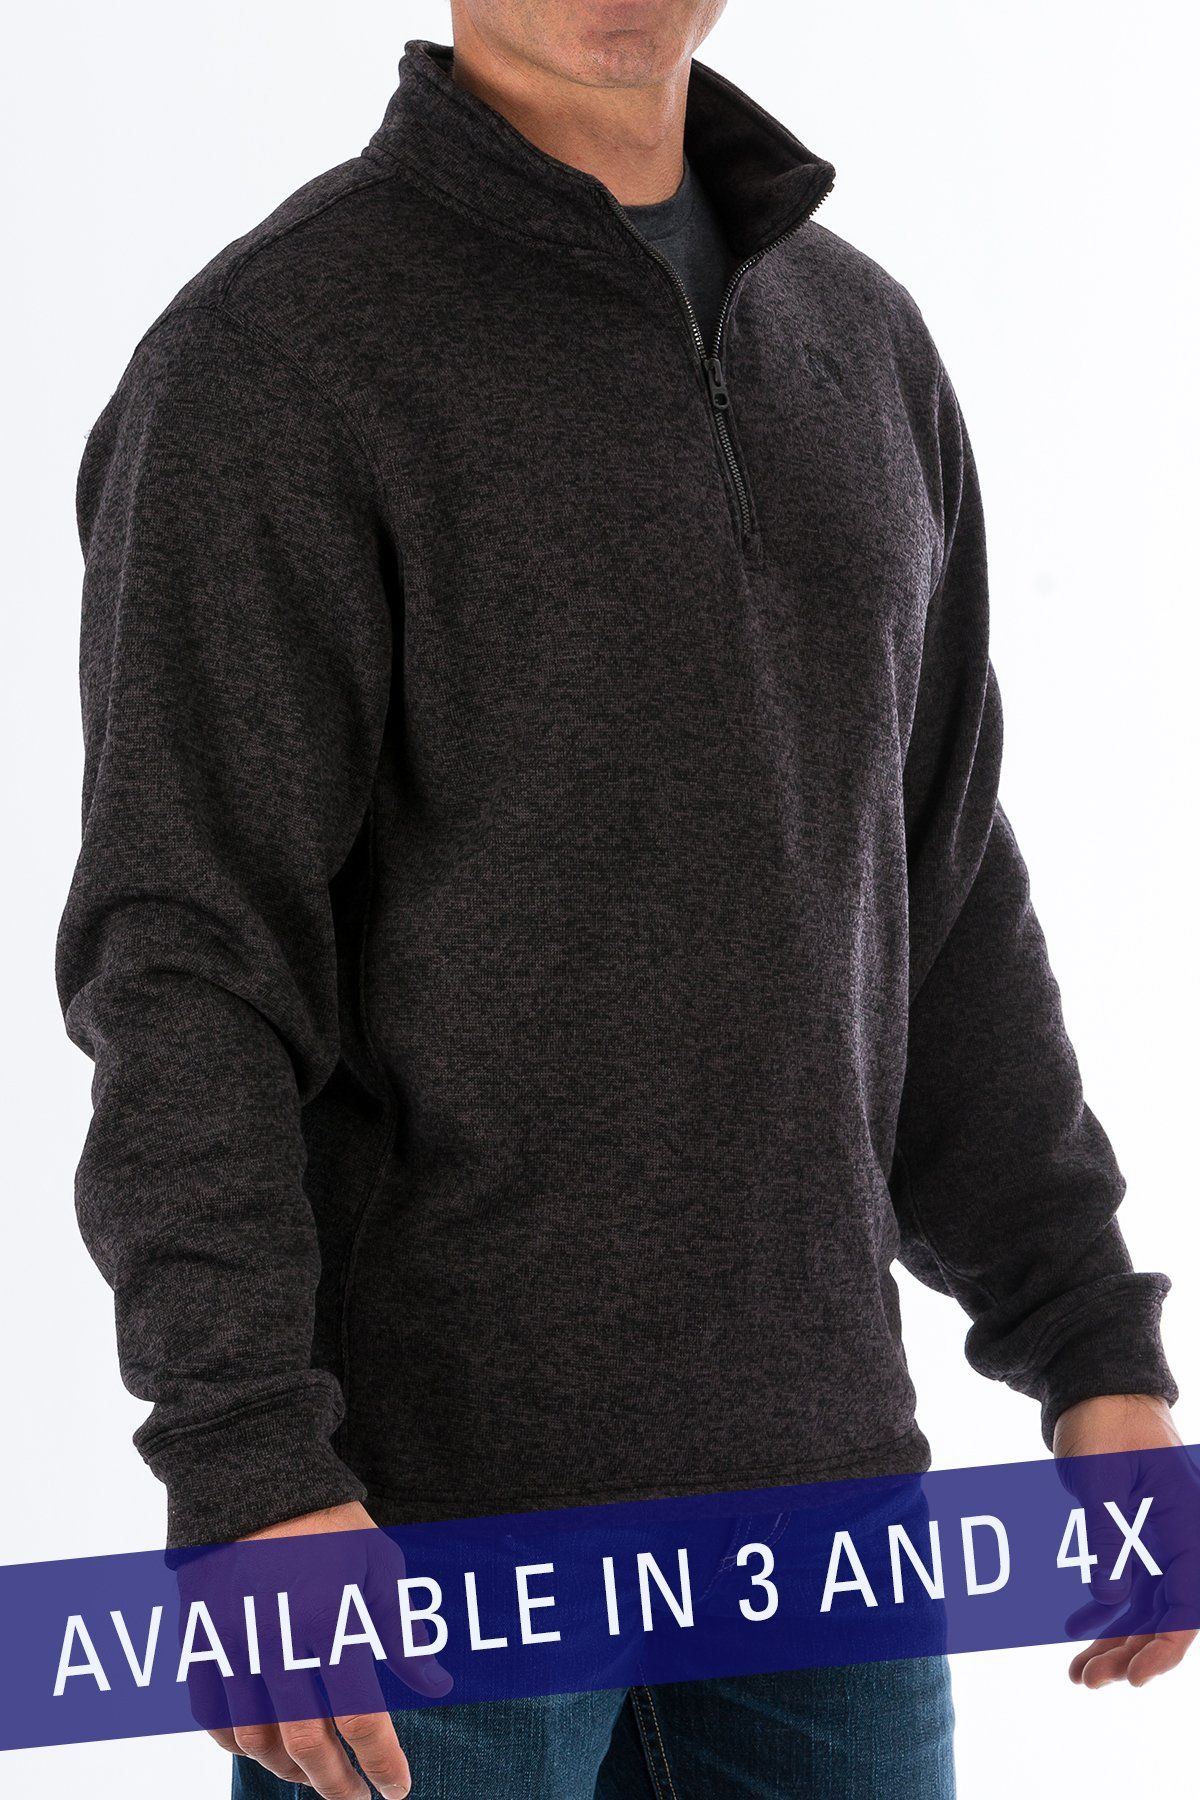 To grader detail bro Cinch Mens 3XL 1/4 Zip Sweater Pullover - Black MWK108001X